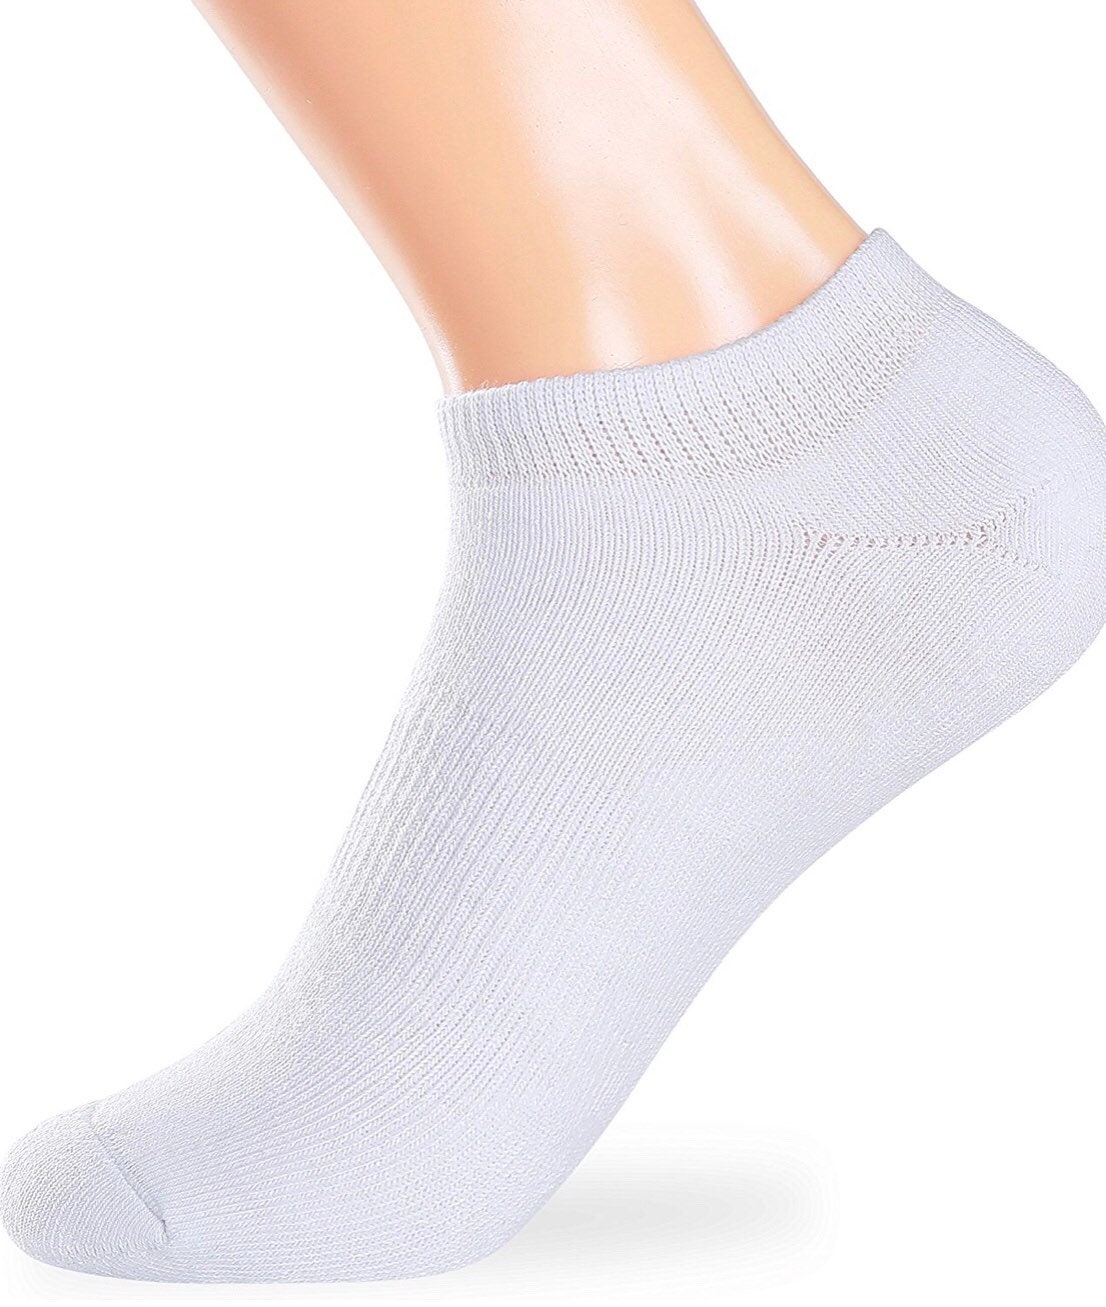 IVF Socks Fertility Sock Lucky Socks Baby Dust Transfer | Etsy